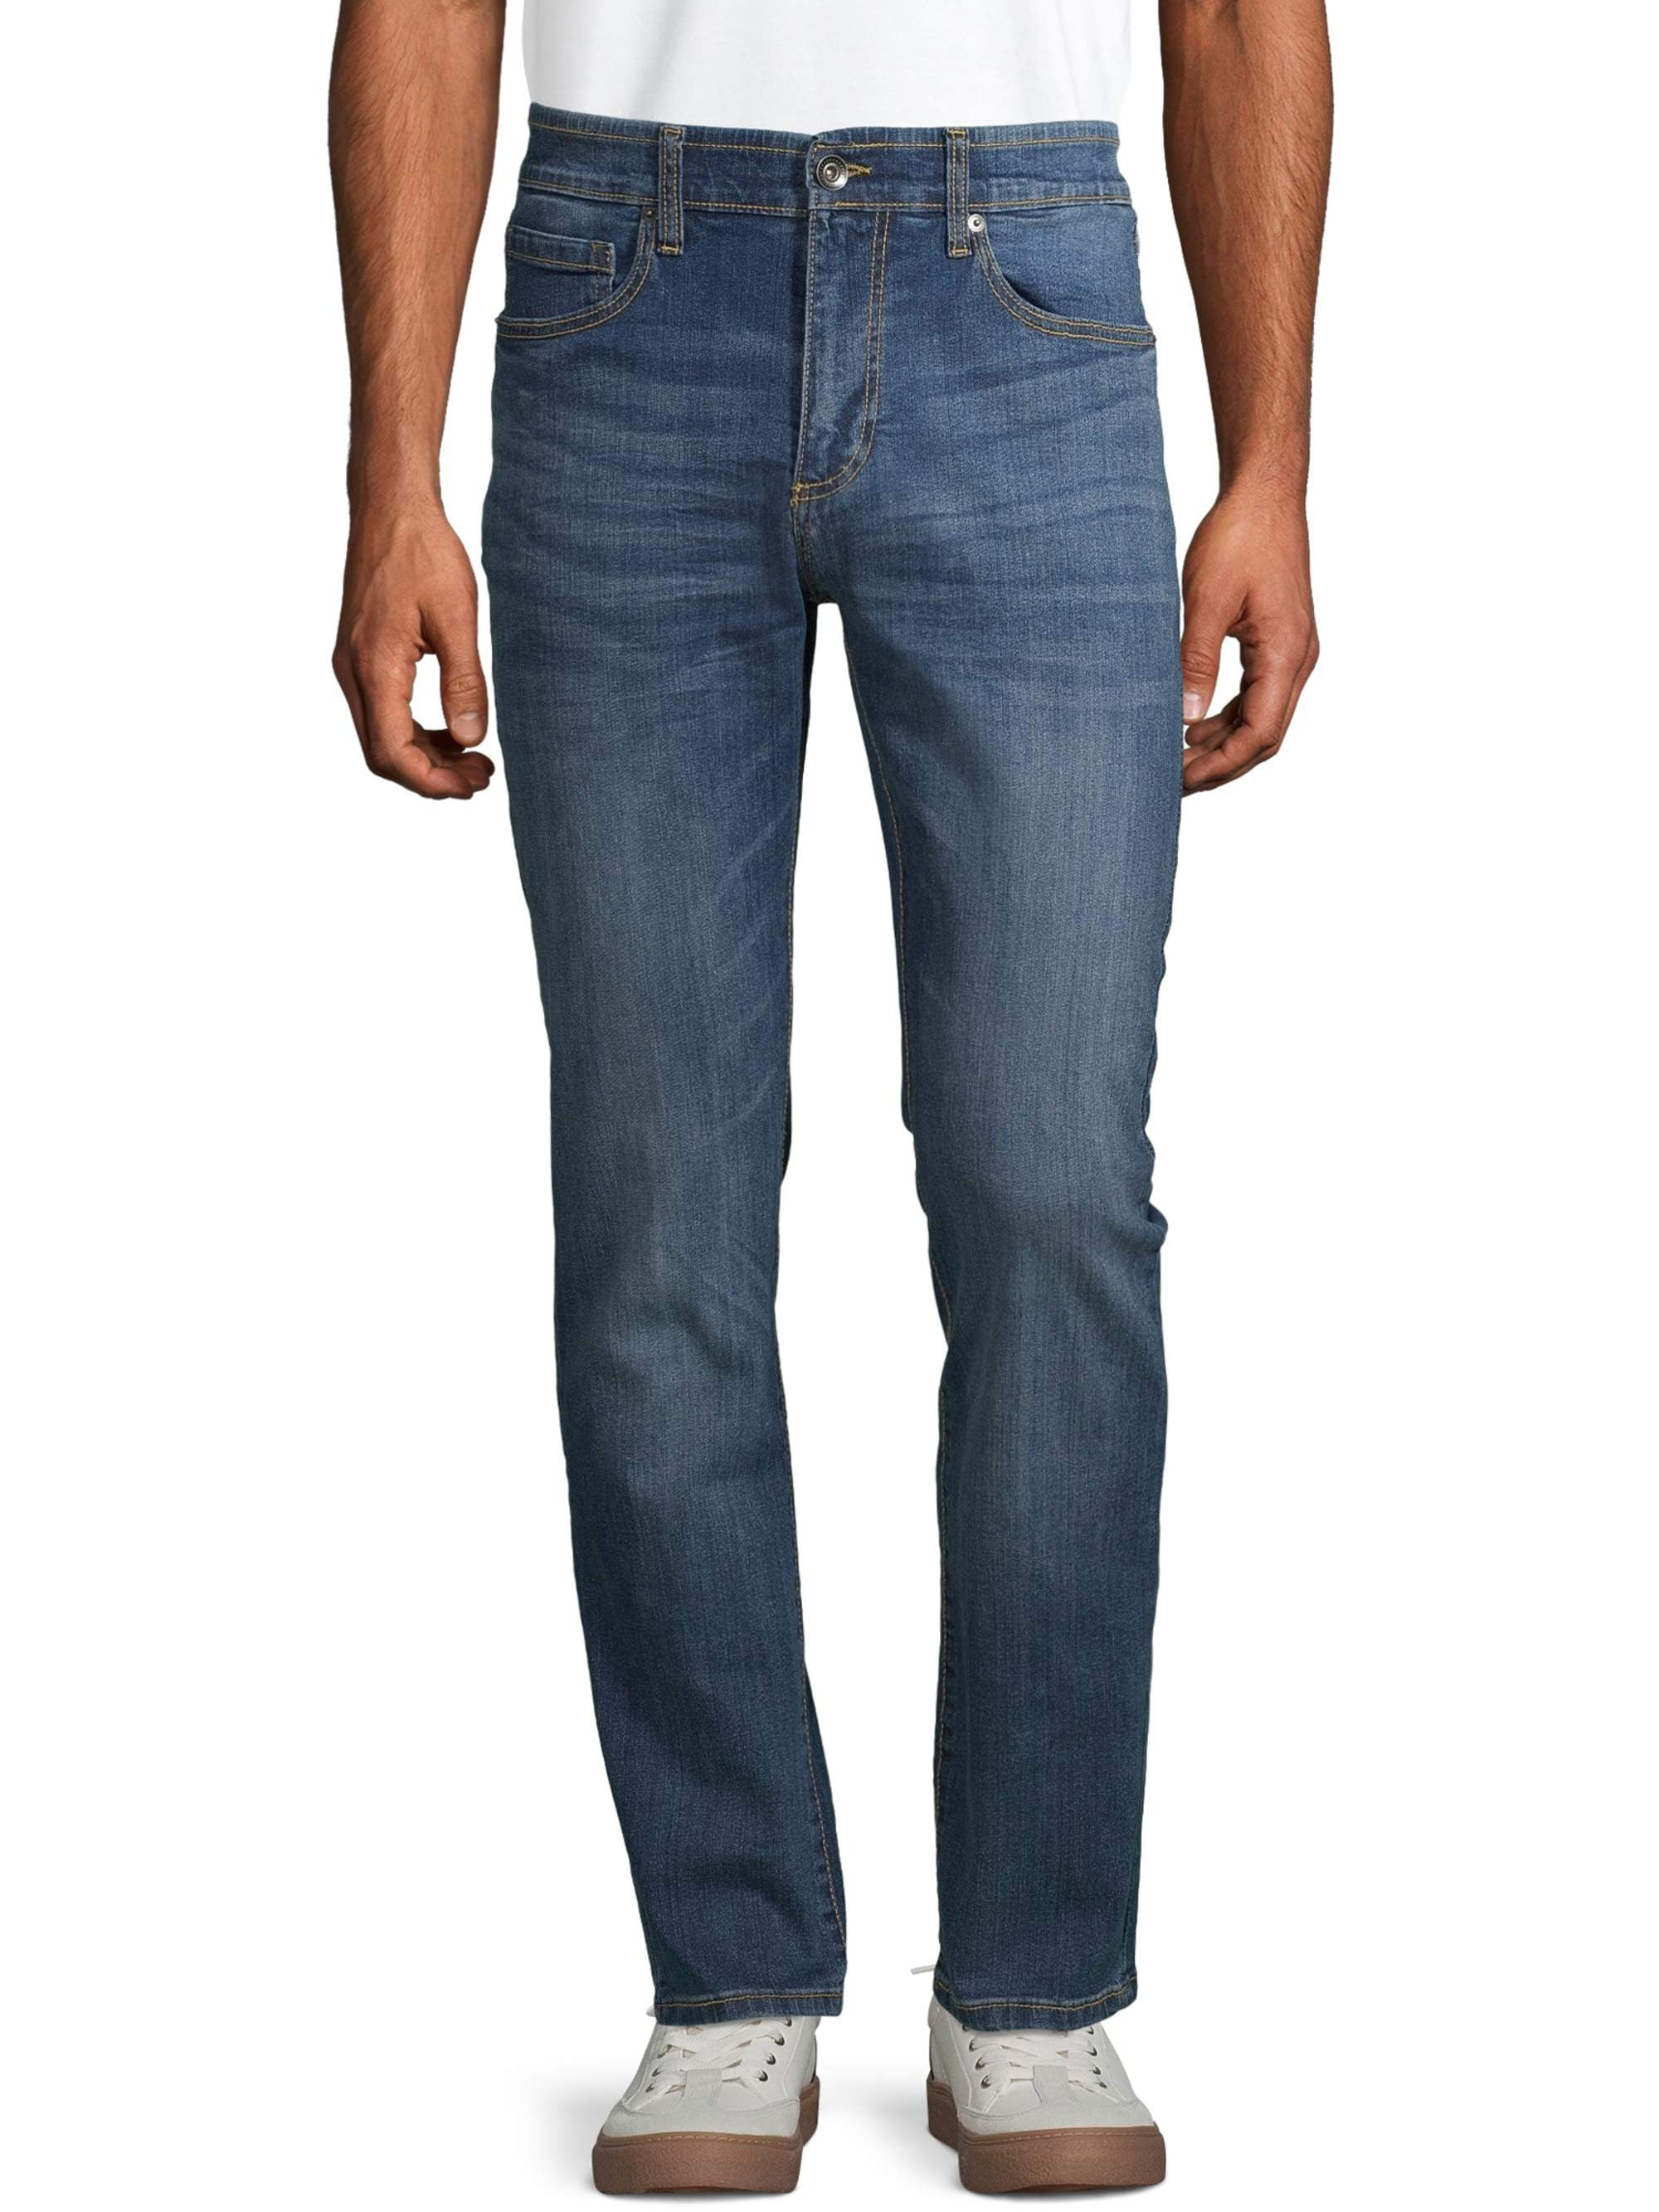 Lazer - Lazer Men's Slim Straight Denim Jeans - Walmart.com - Walmart.com